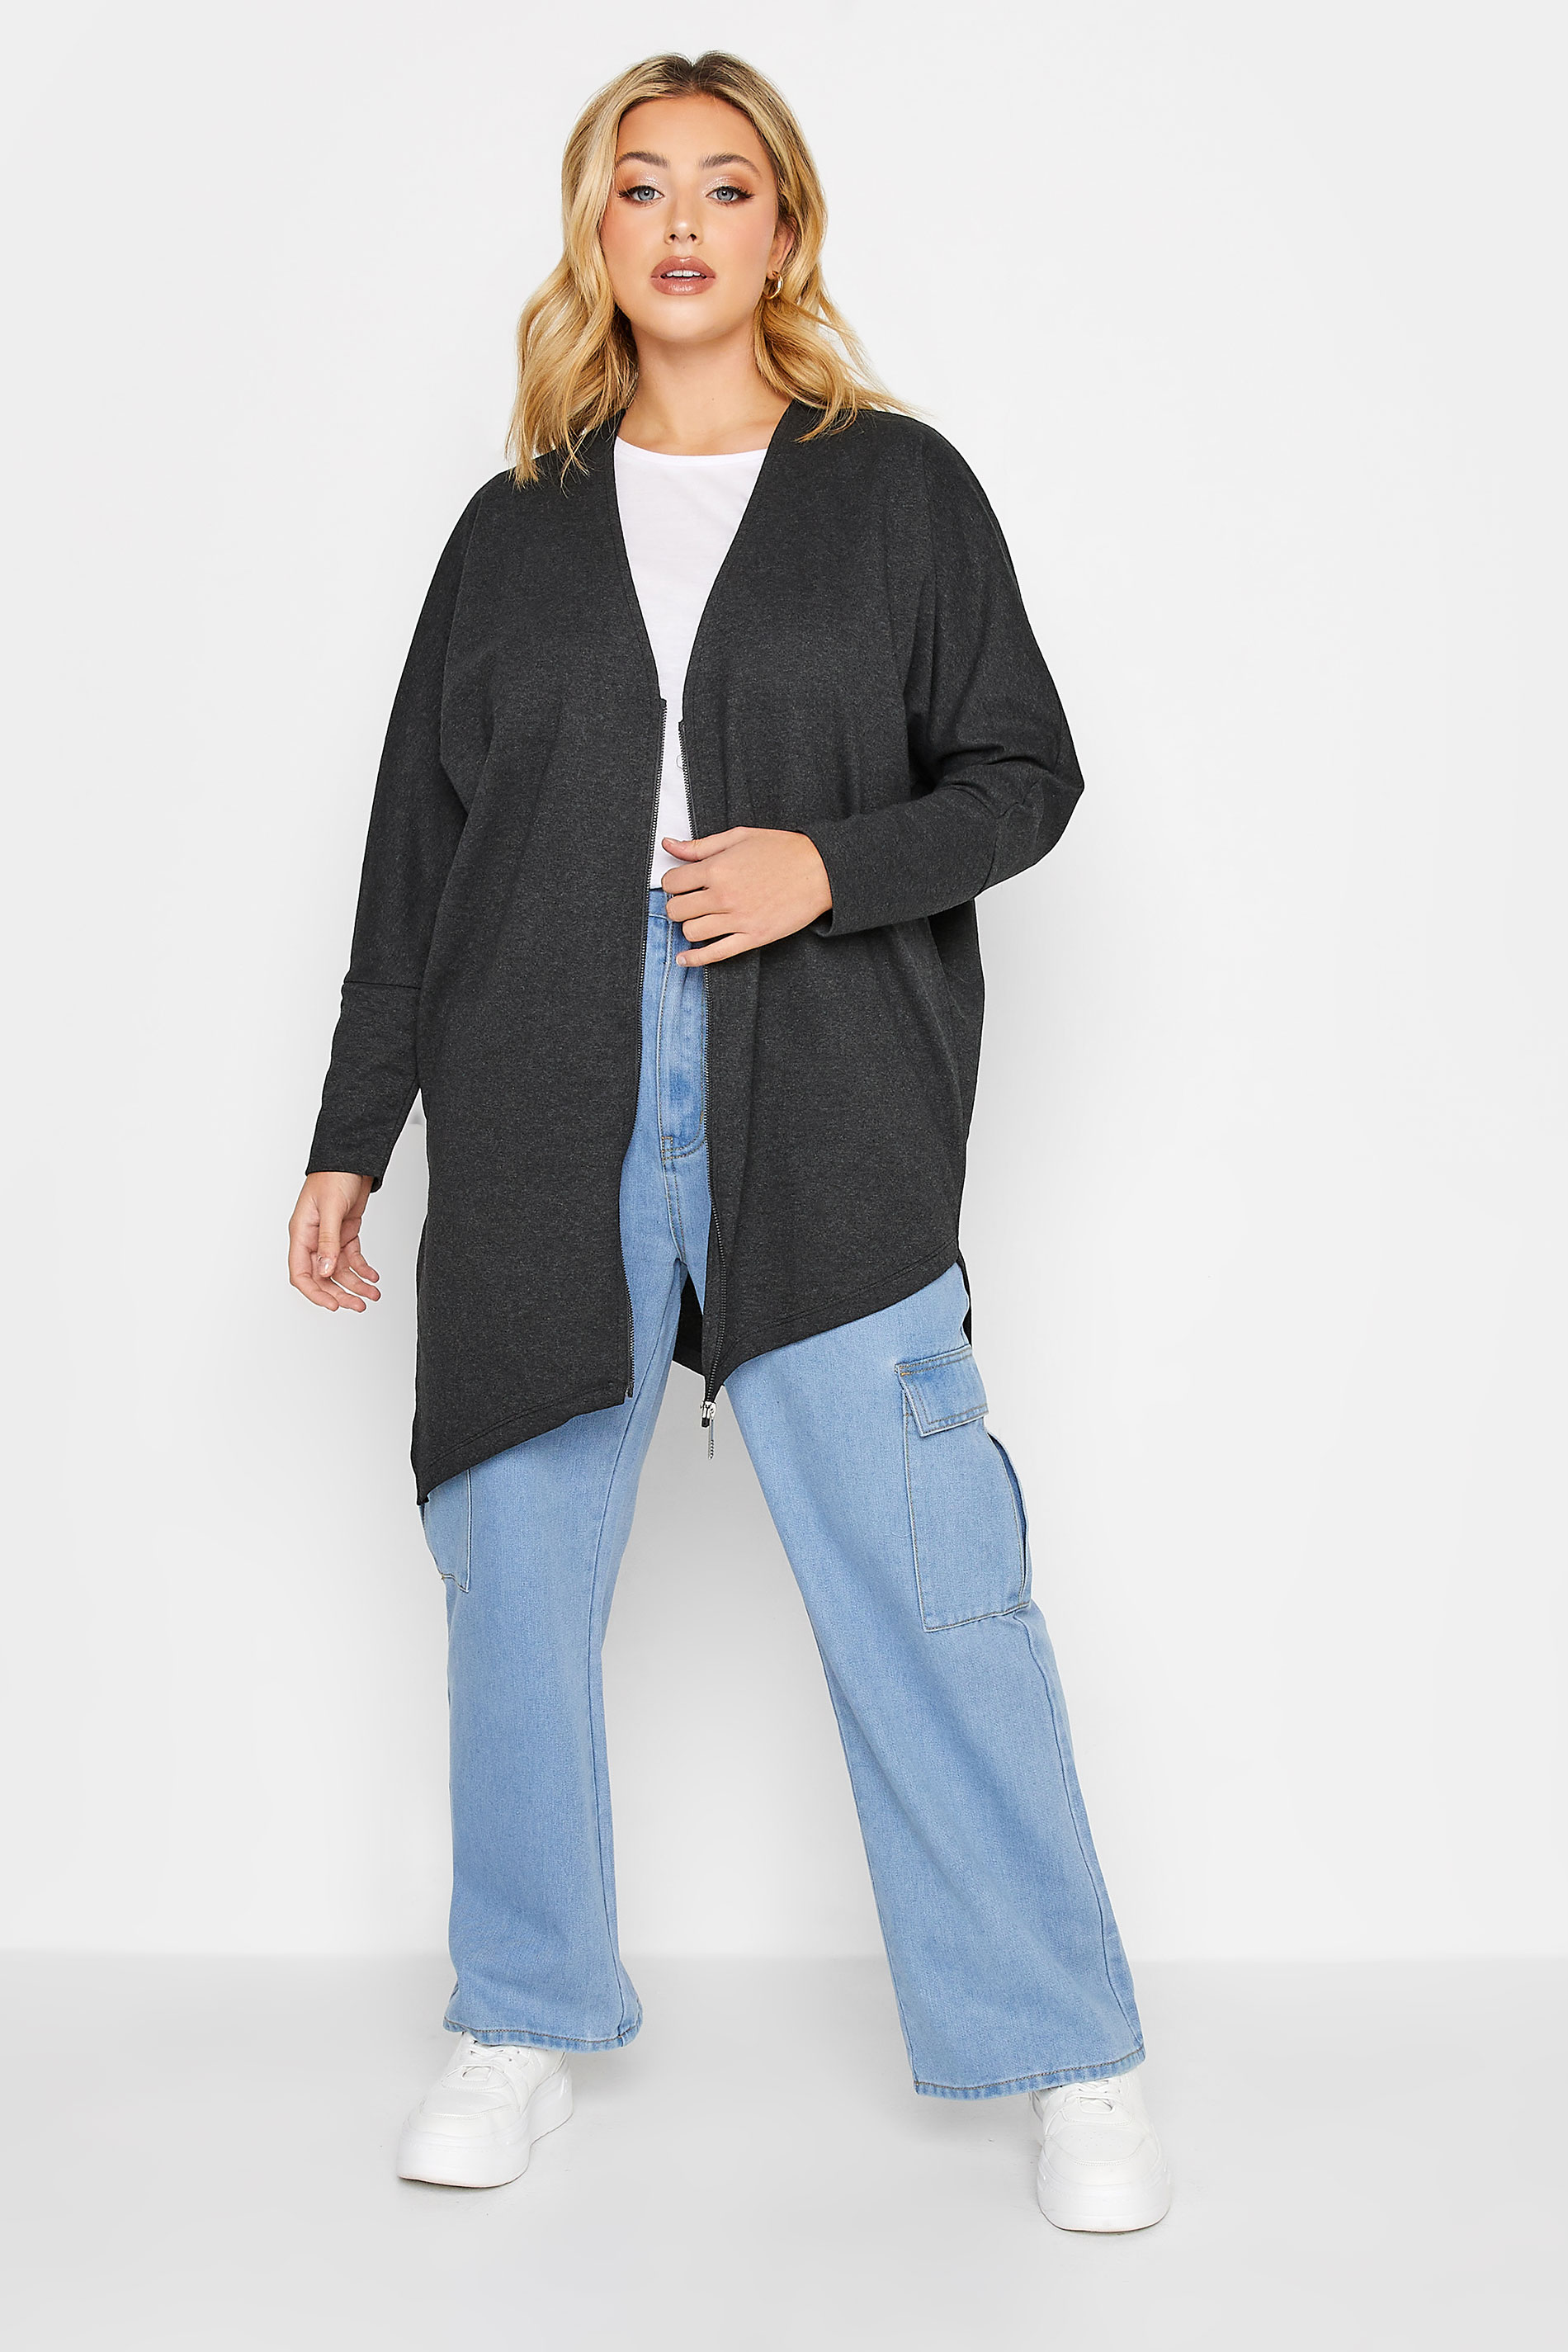 Plus Size Charcoal Grey Asymmetric Hem Zip Front Cardigan | Yours Clothing  3